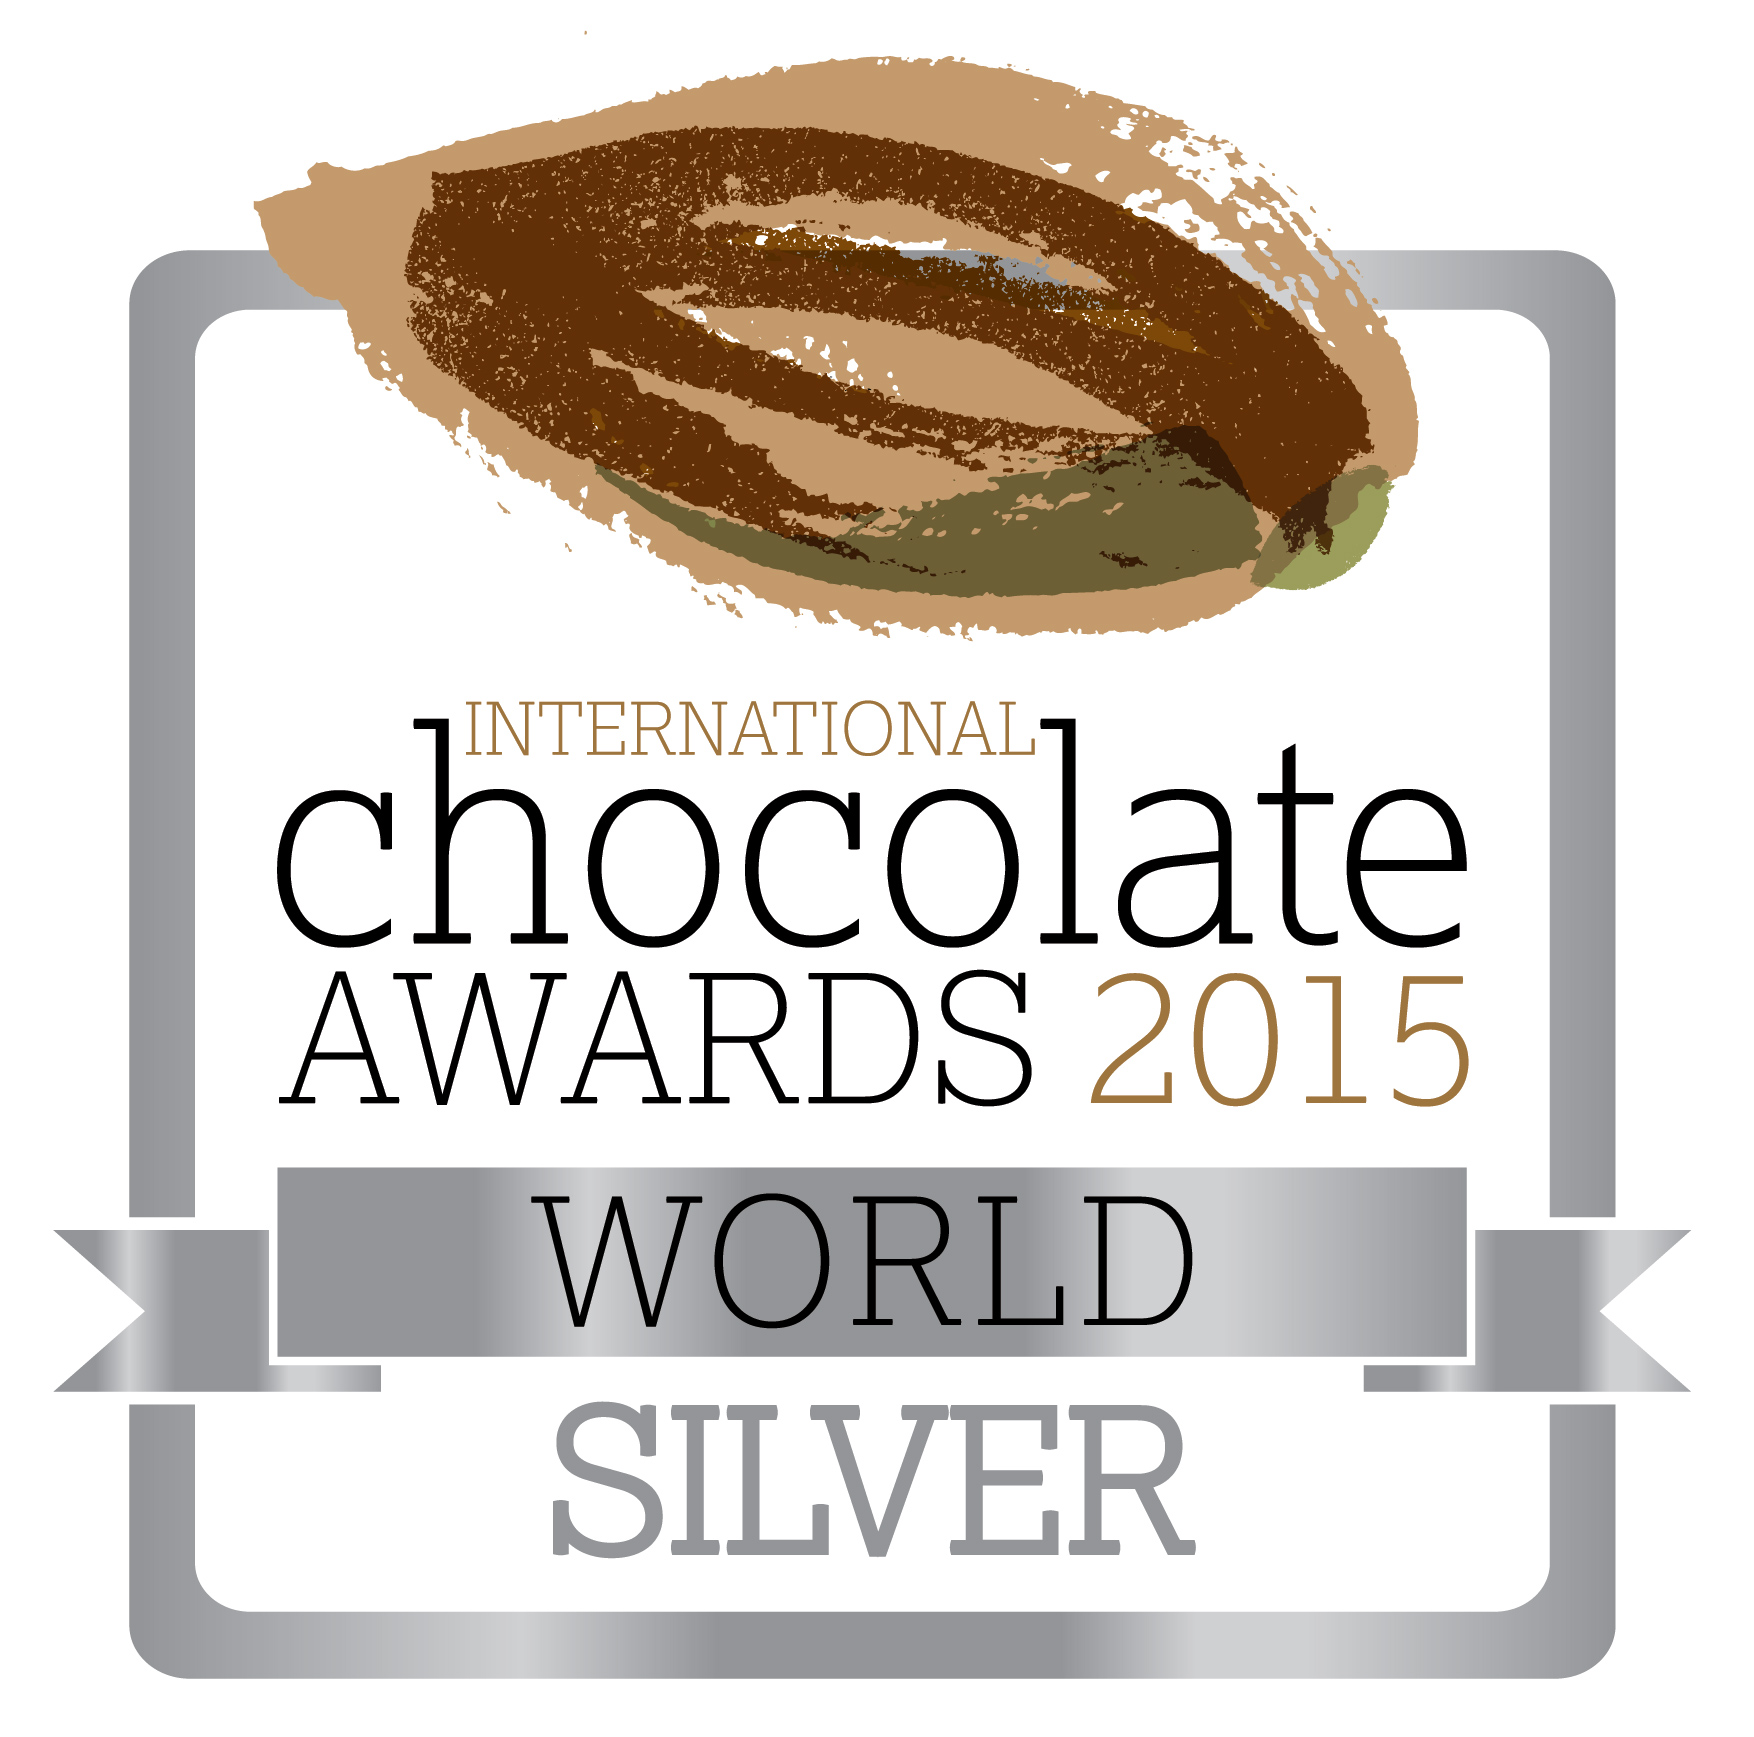 International Chocolate Awards 2015 - Silver - World RGB - web.jpg